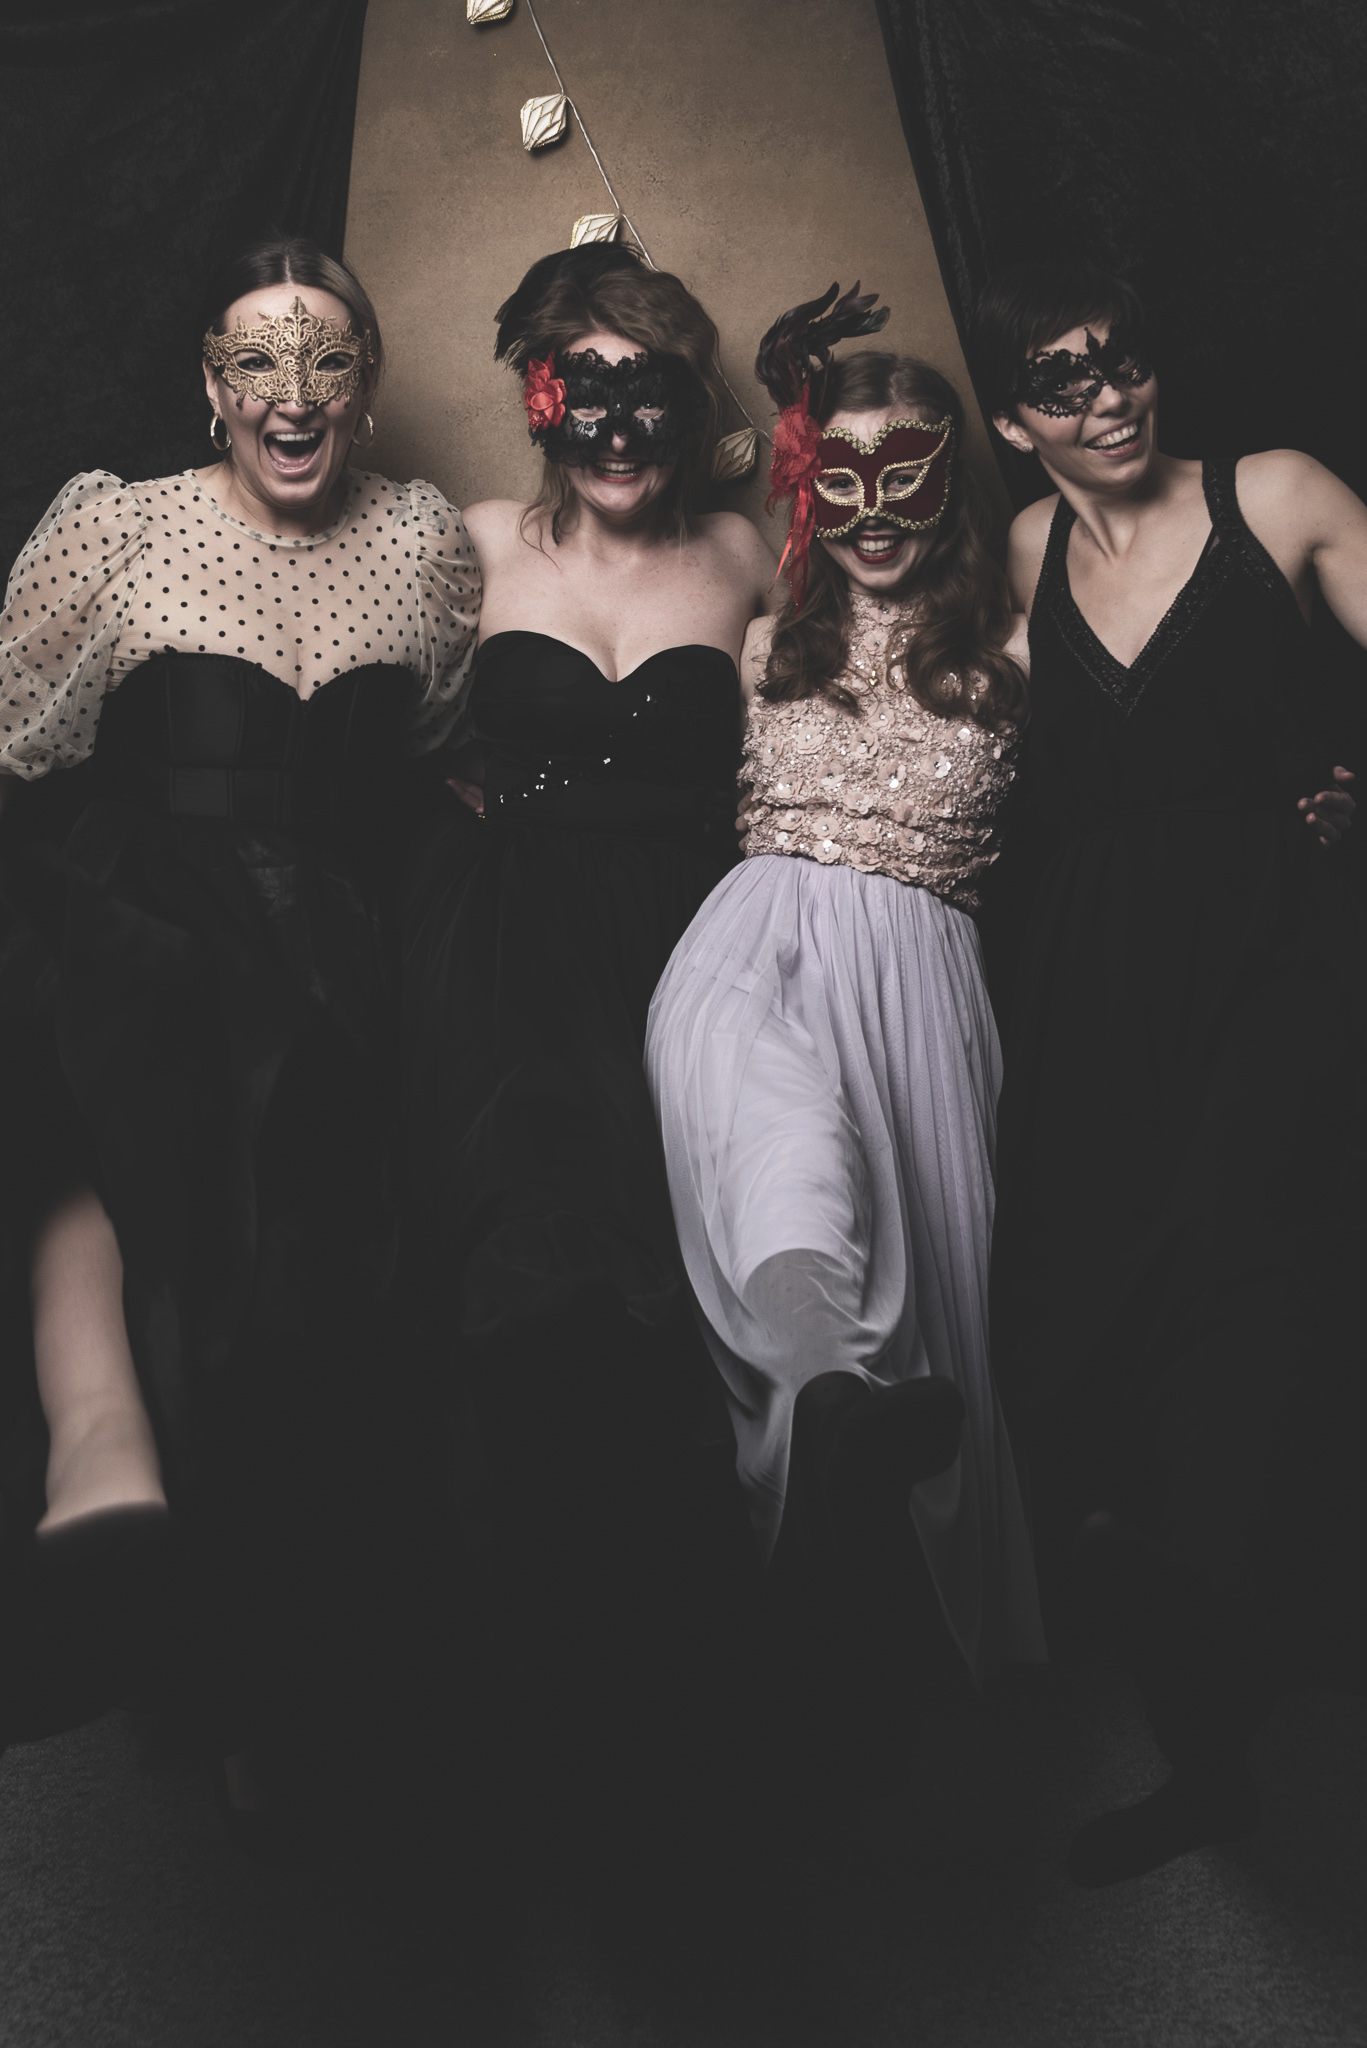 girls, piger, masqurade, maskerade, bal, ball, photobooth, new year party, nytårsfest, ball dress, balkjoler, masques, masker, champagne